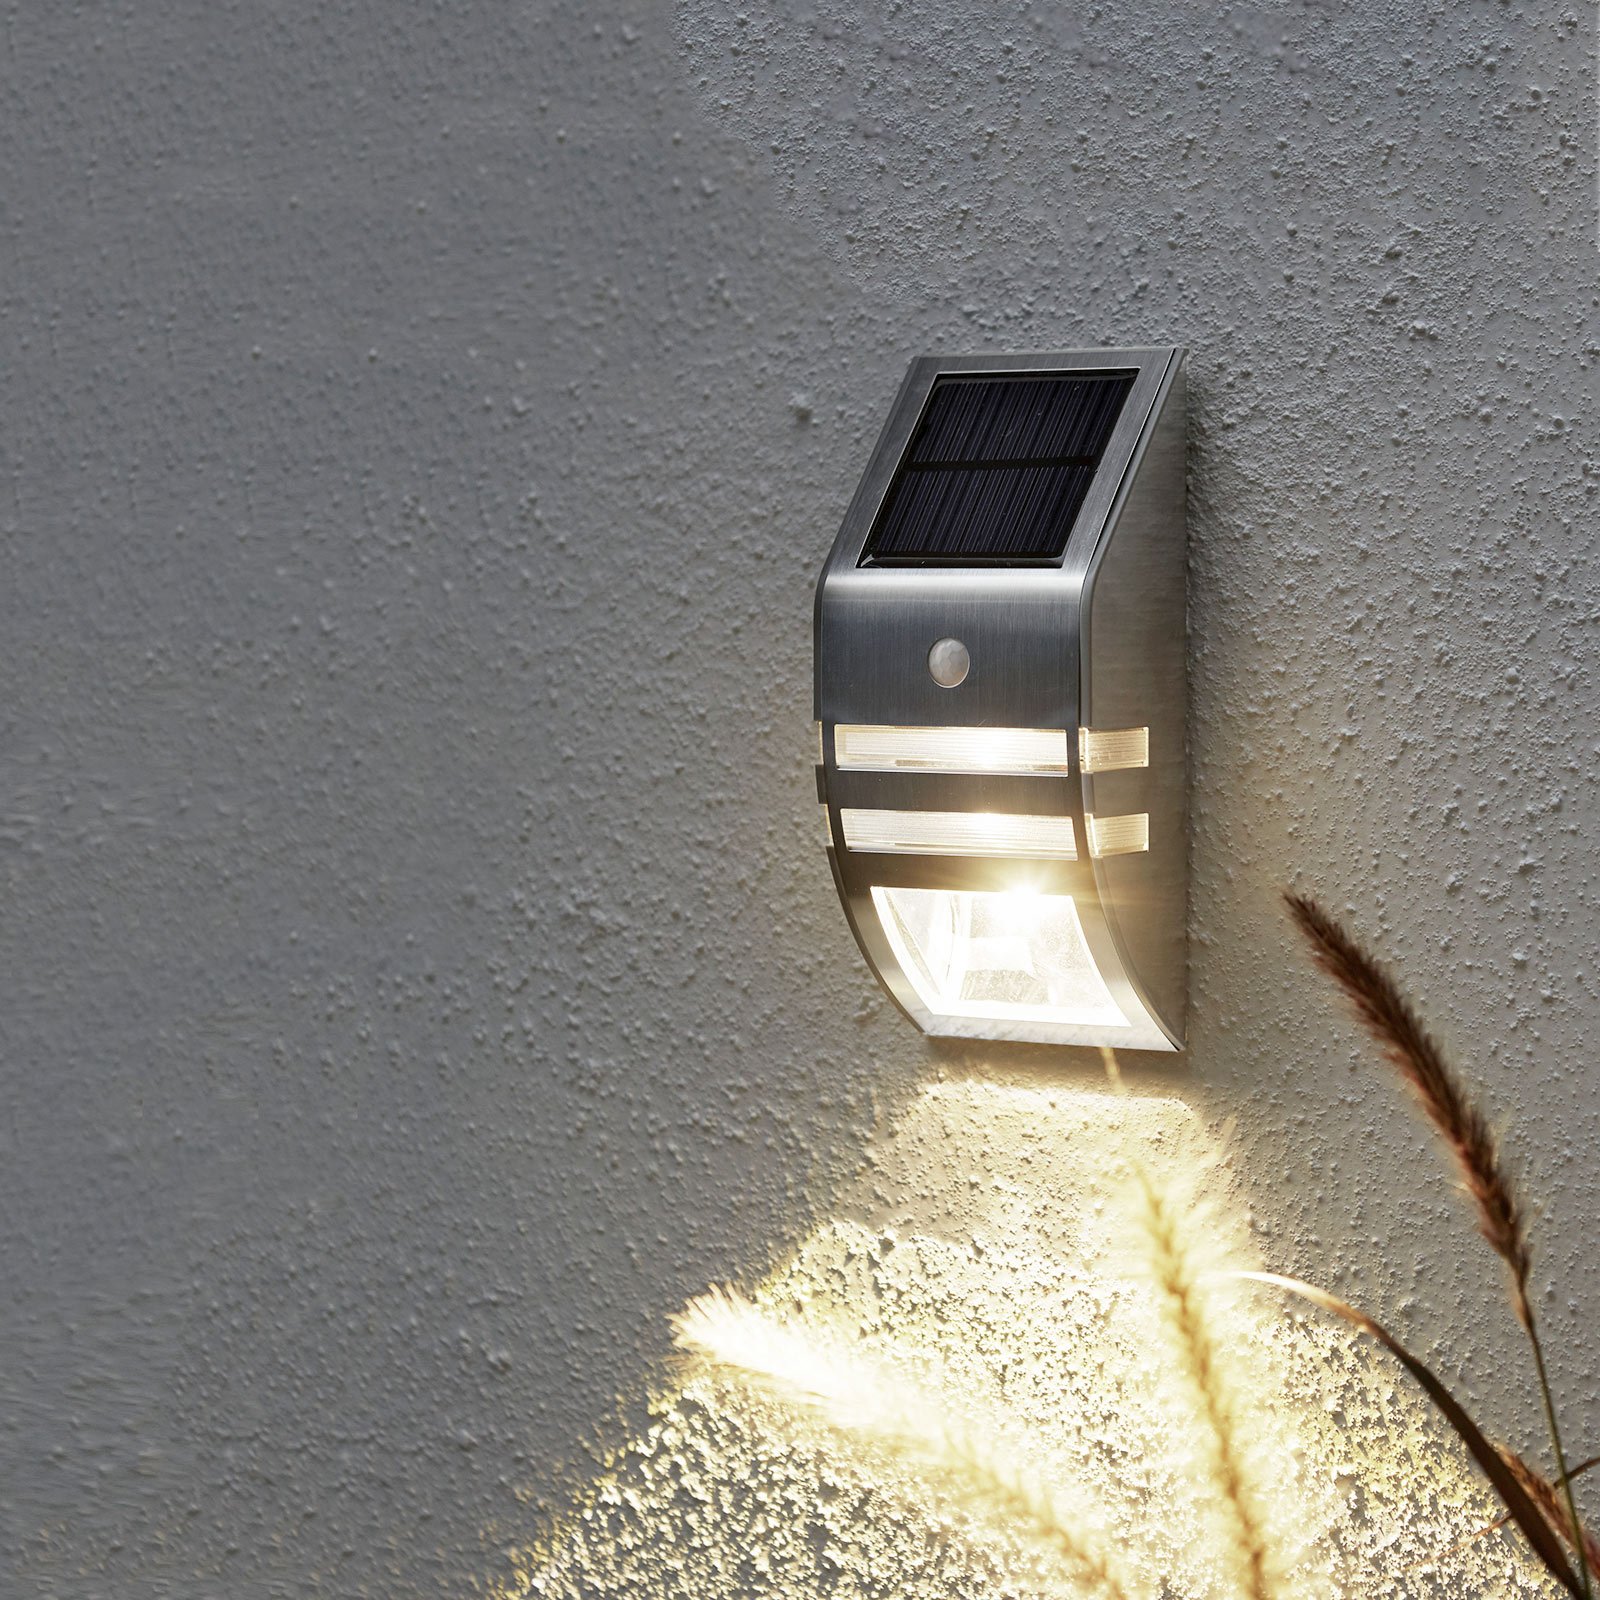 LED solar wall light Wally, motion detector